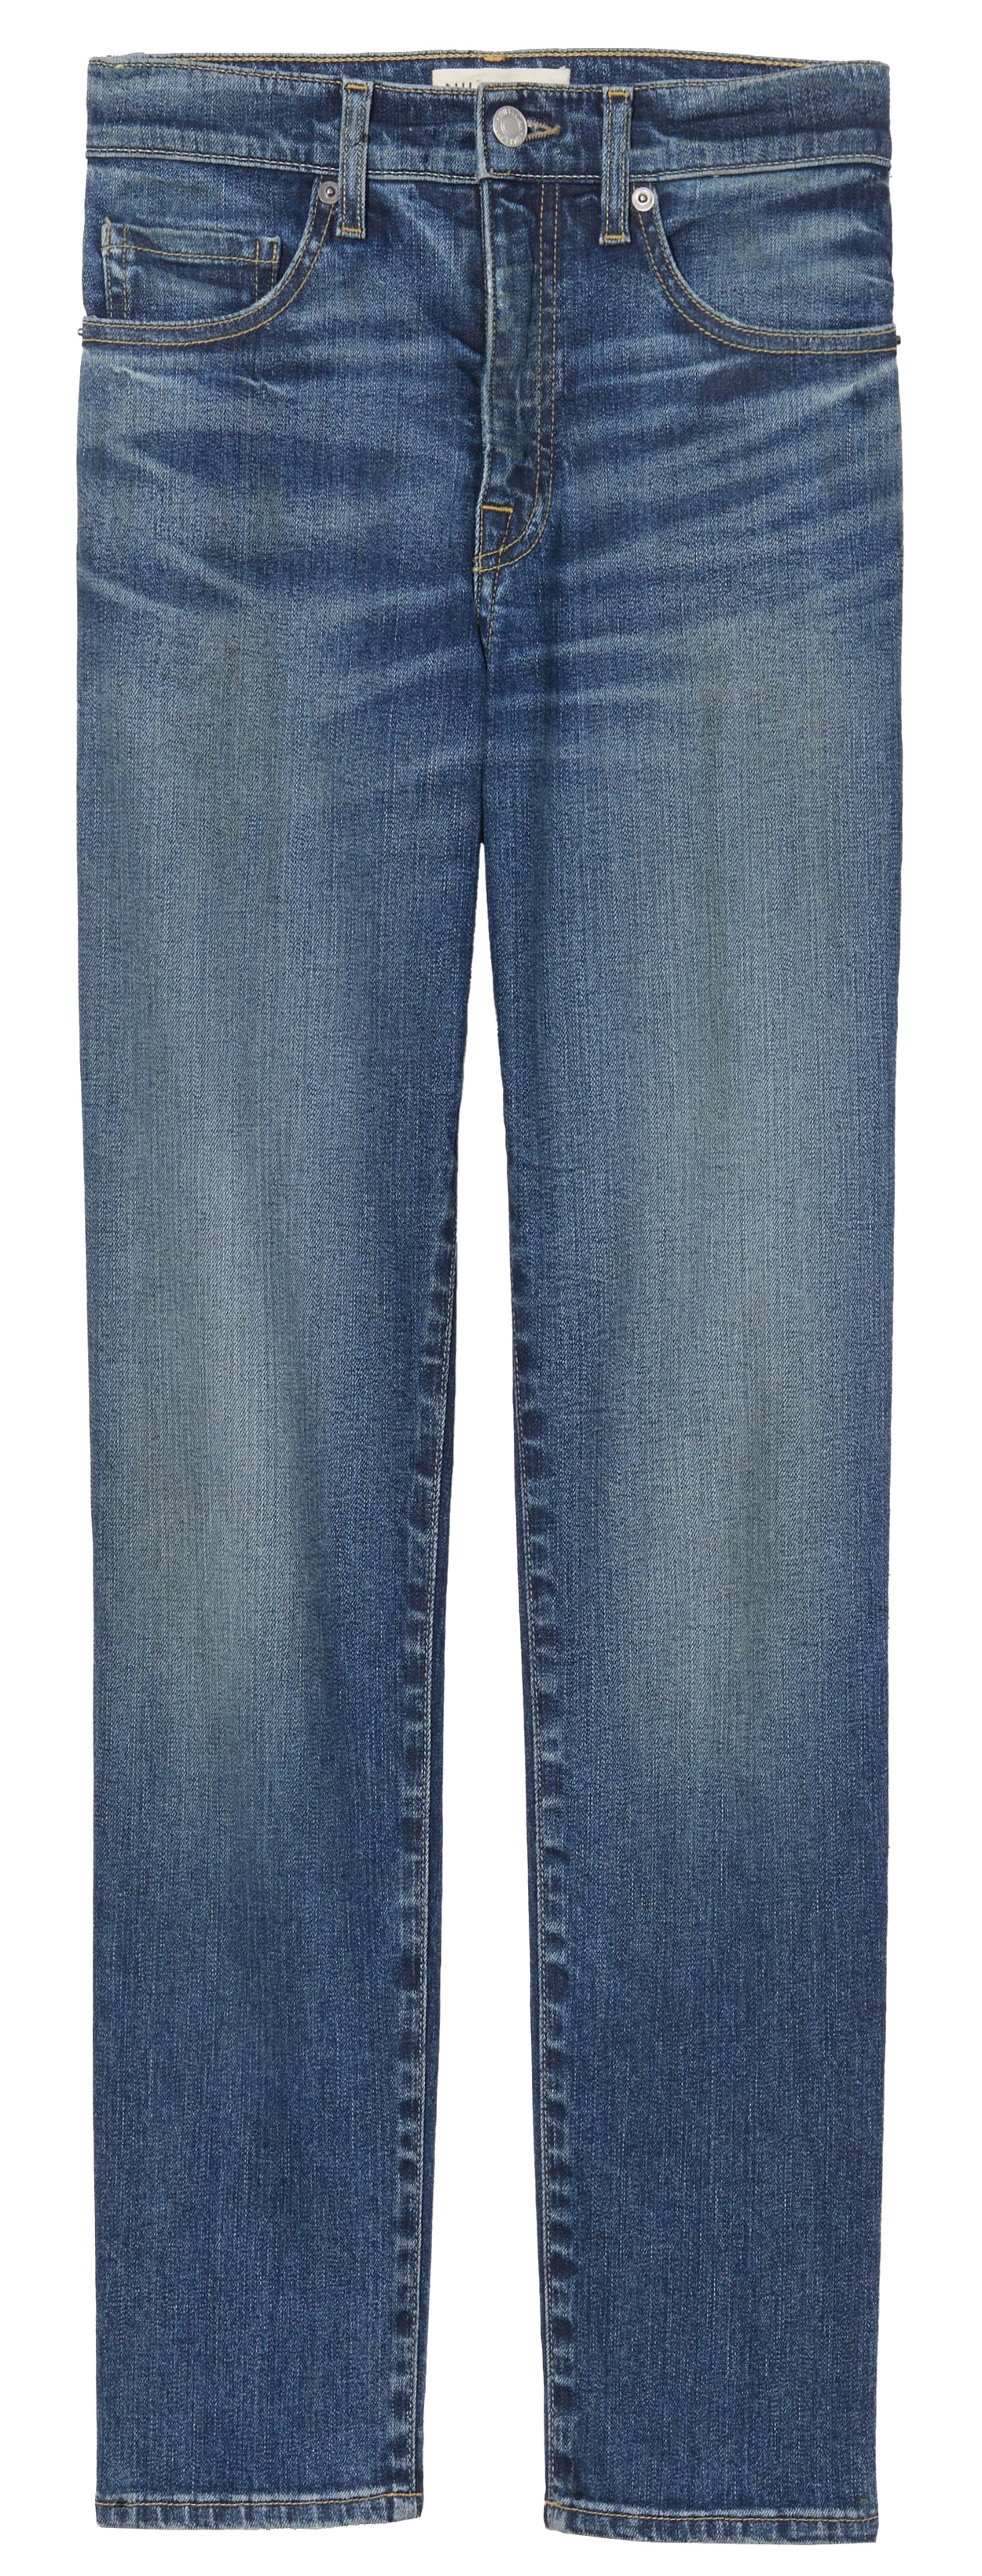 NILI LOTAN Jonas Skinny Jeans in Classic Wash 25